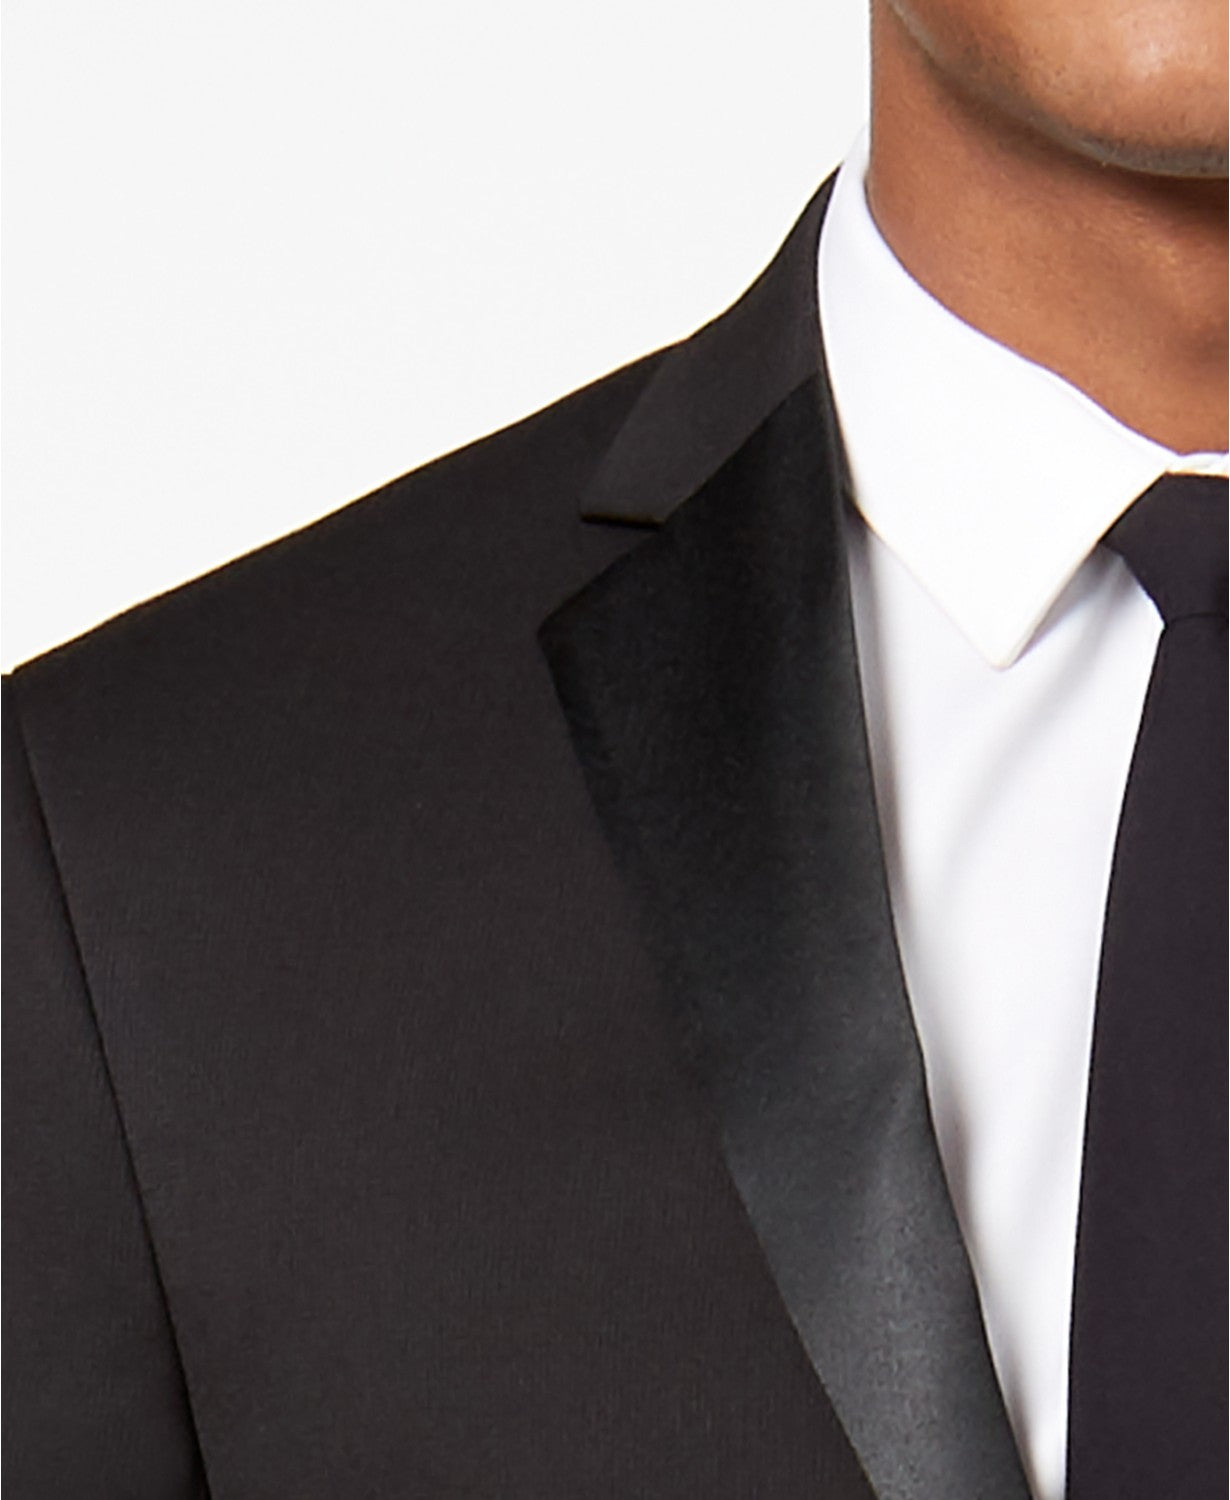 Kenneth Cole Mens Tuxedo Suit Jacket 44R Flex Slim-Fit Black JACKET ONLY